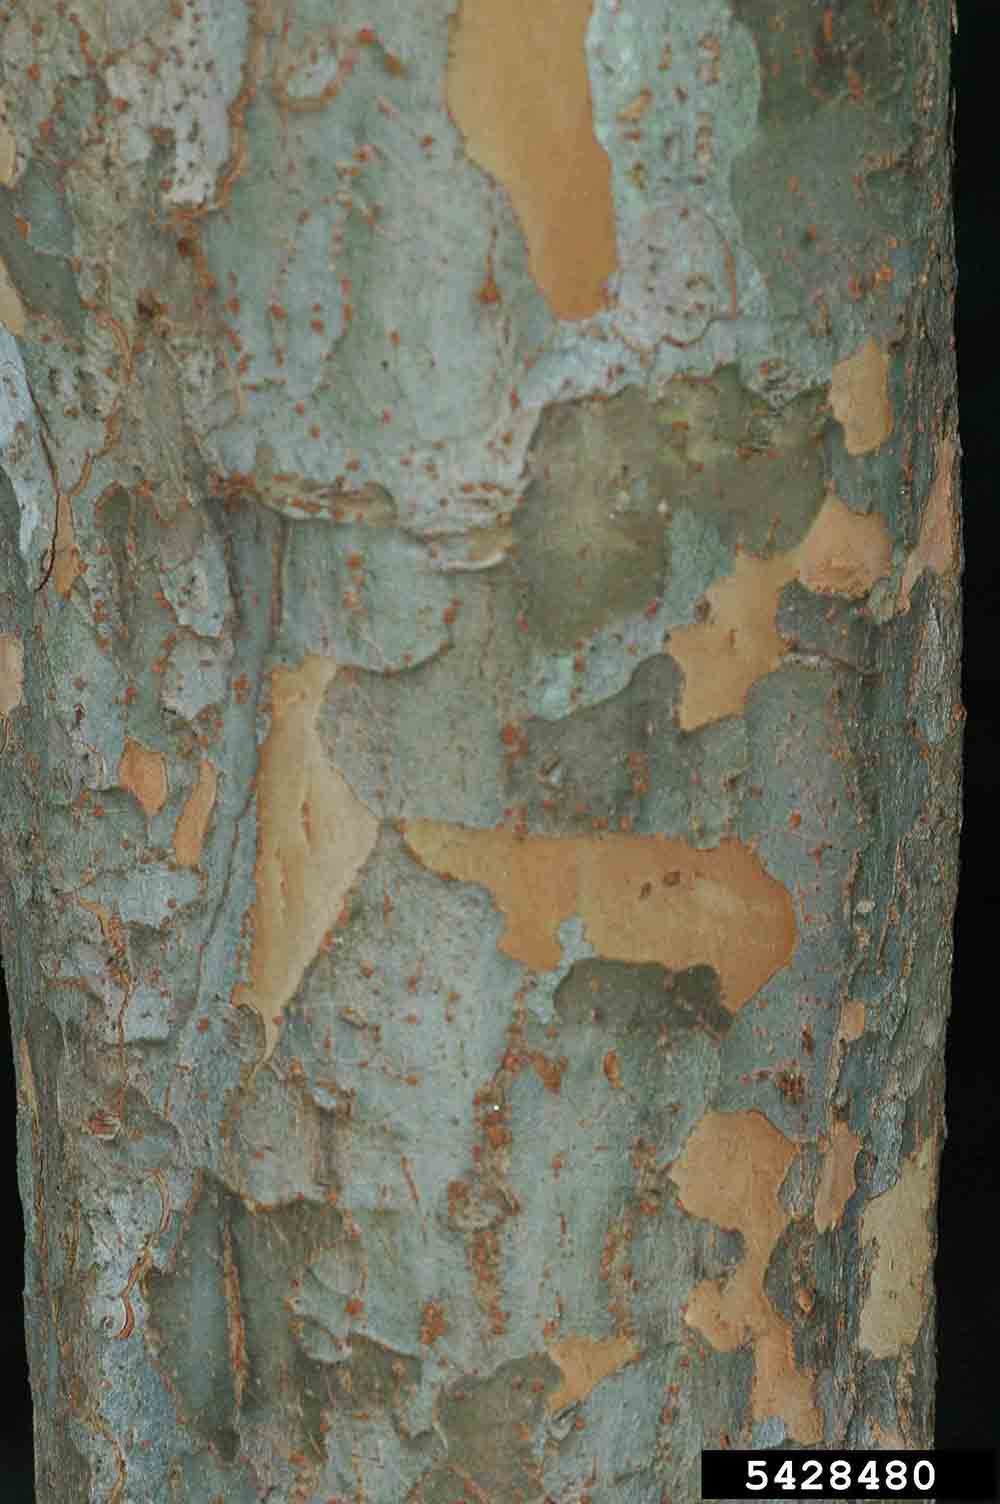 Chinese or lacebark elm bark, giving it the name Lacebark elm